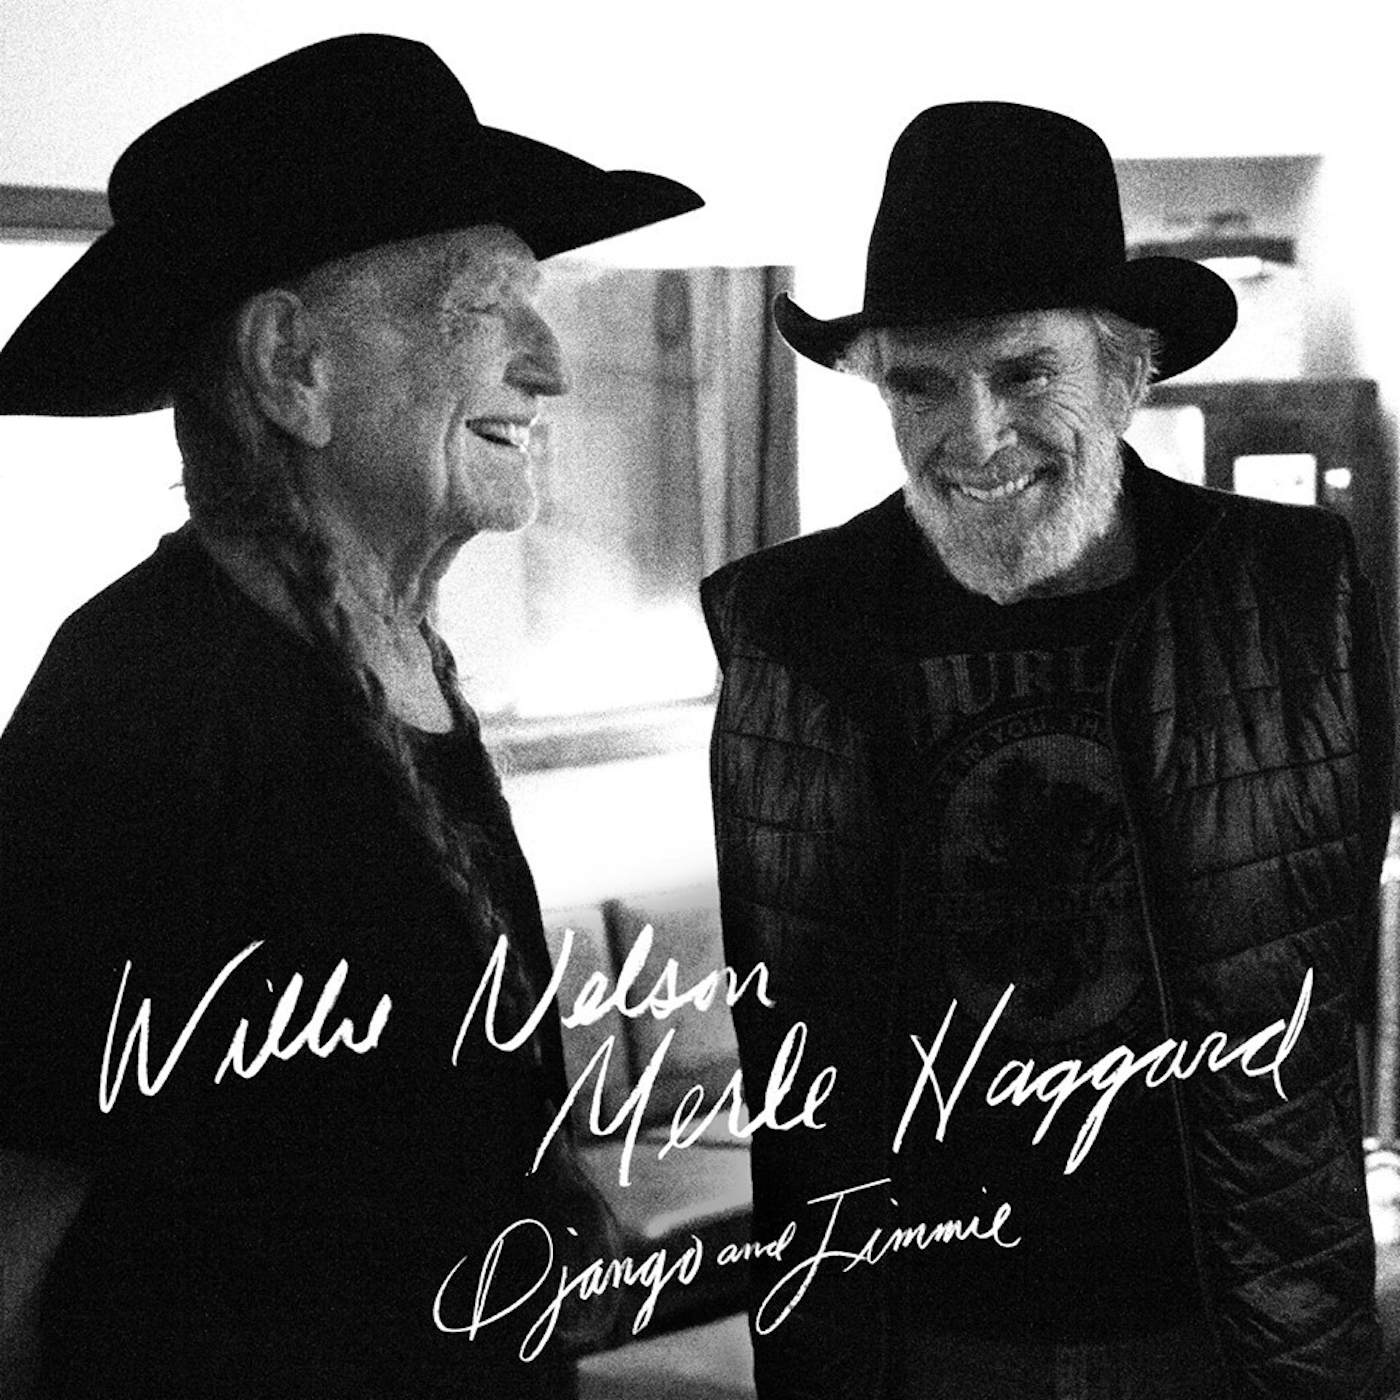 Willie Nelson & Merle Haggard Django And Jimmie Vinyl Record